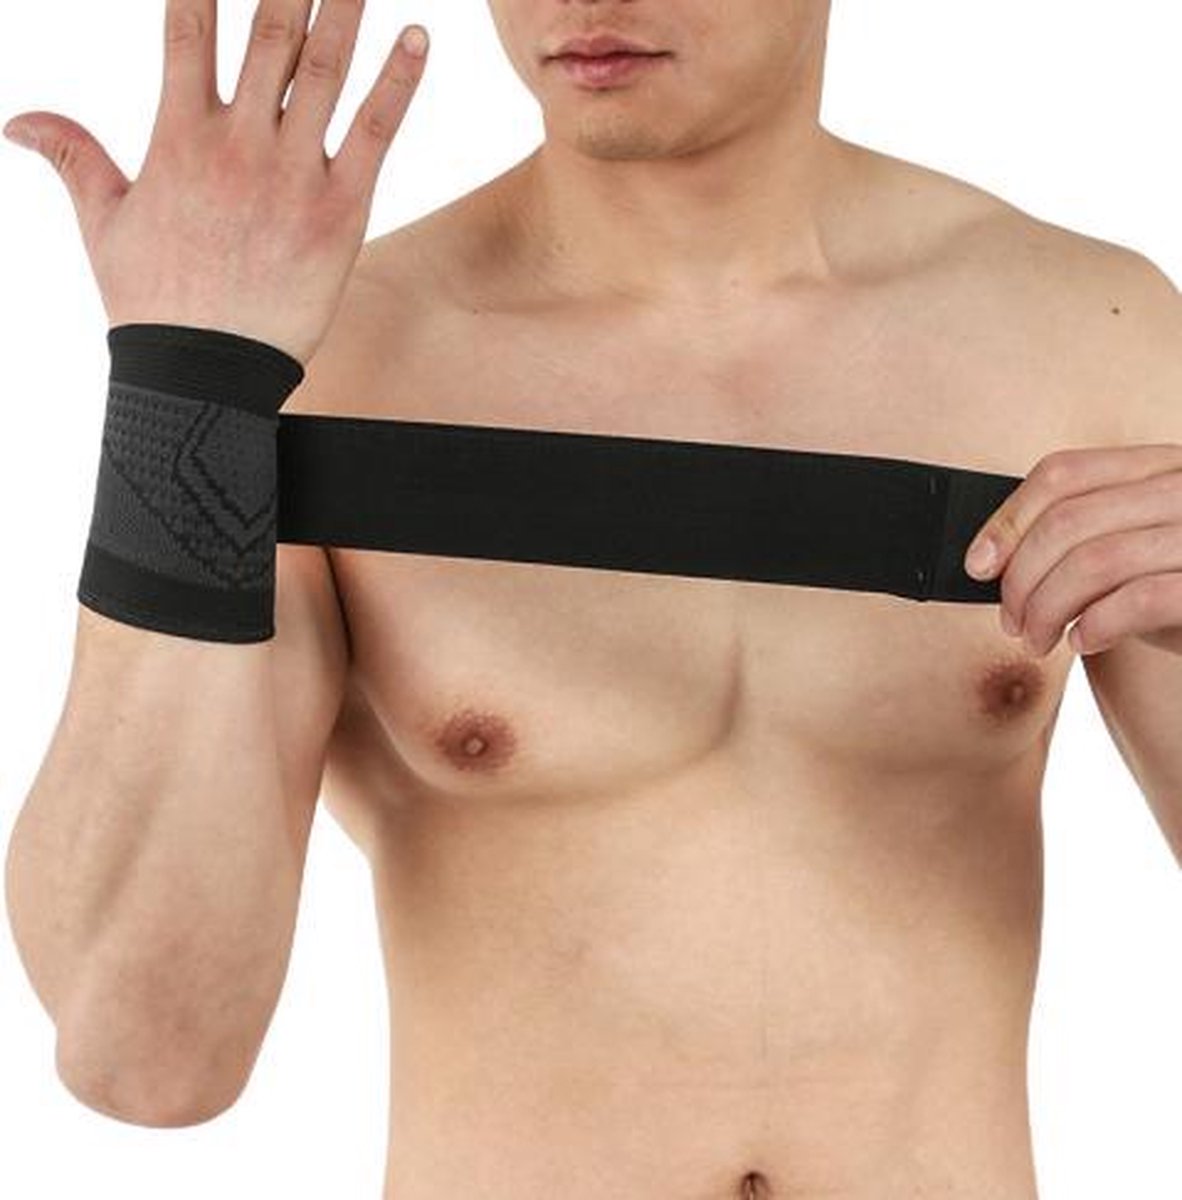 Polsbrace - Pols Bandage - Pols brace - Hand Brace - Polssteun - Polsondersteuning - Neopreen - Comfort fit - Zwart - Universeel - Maat L